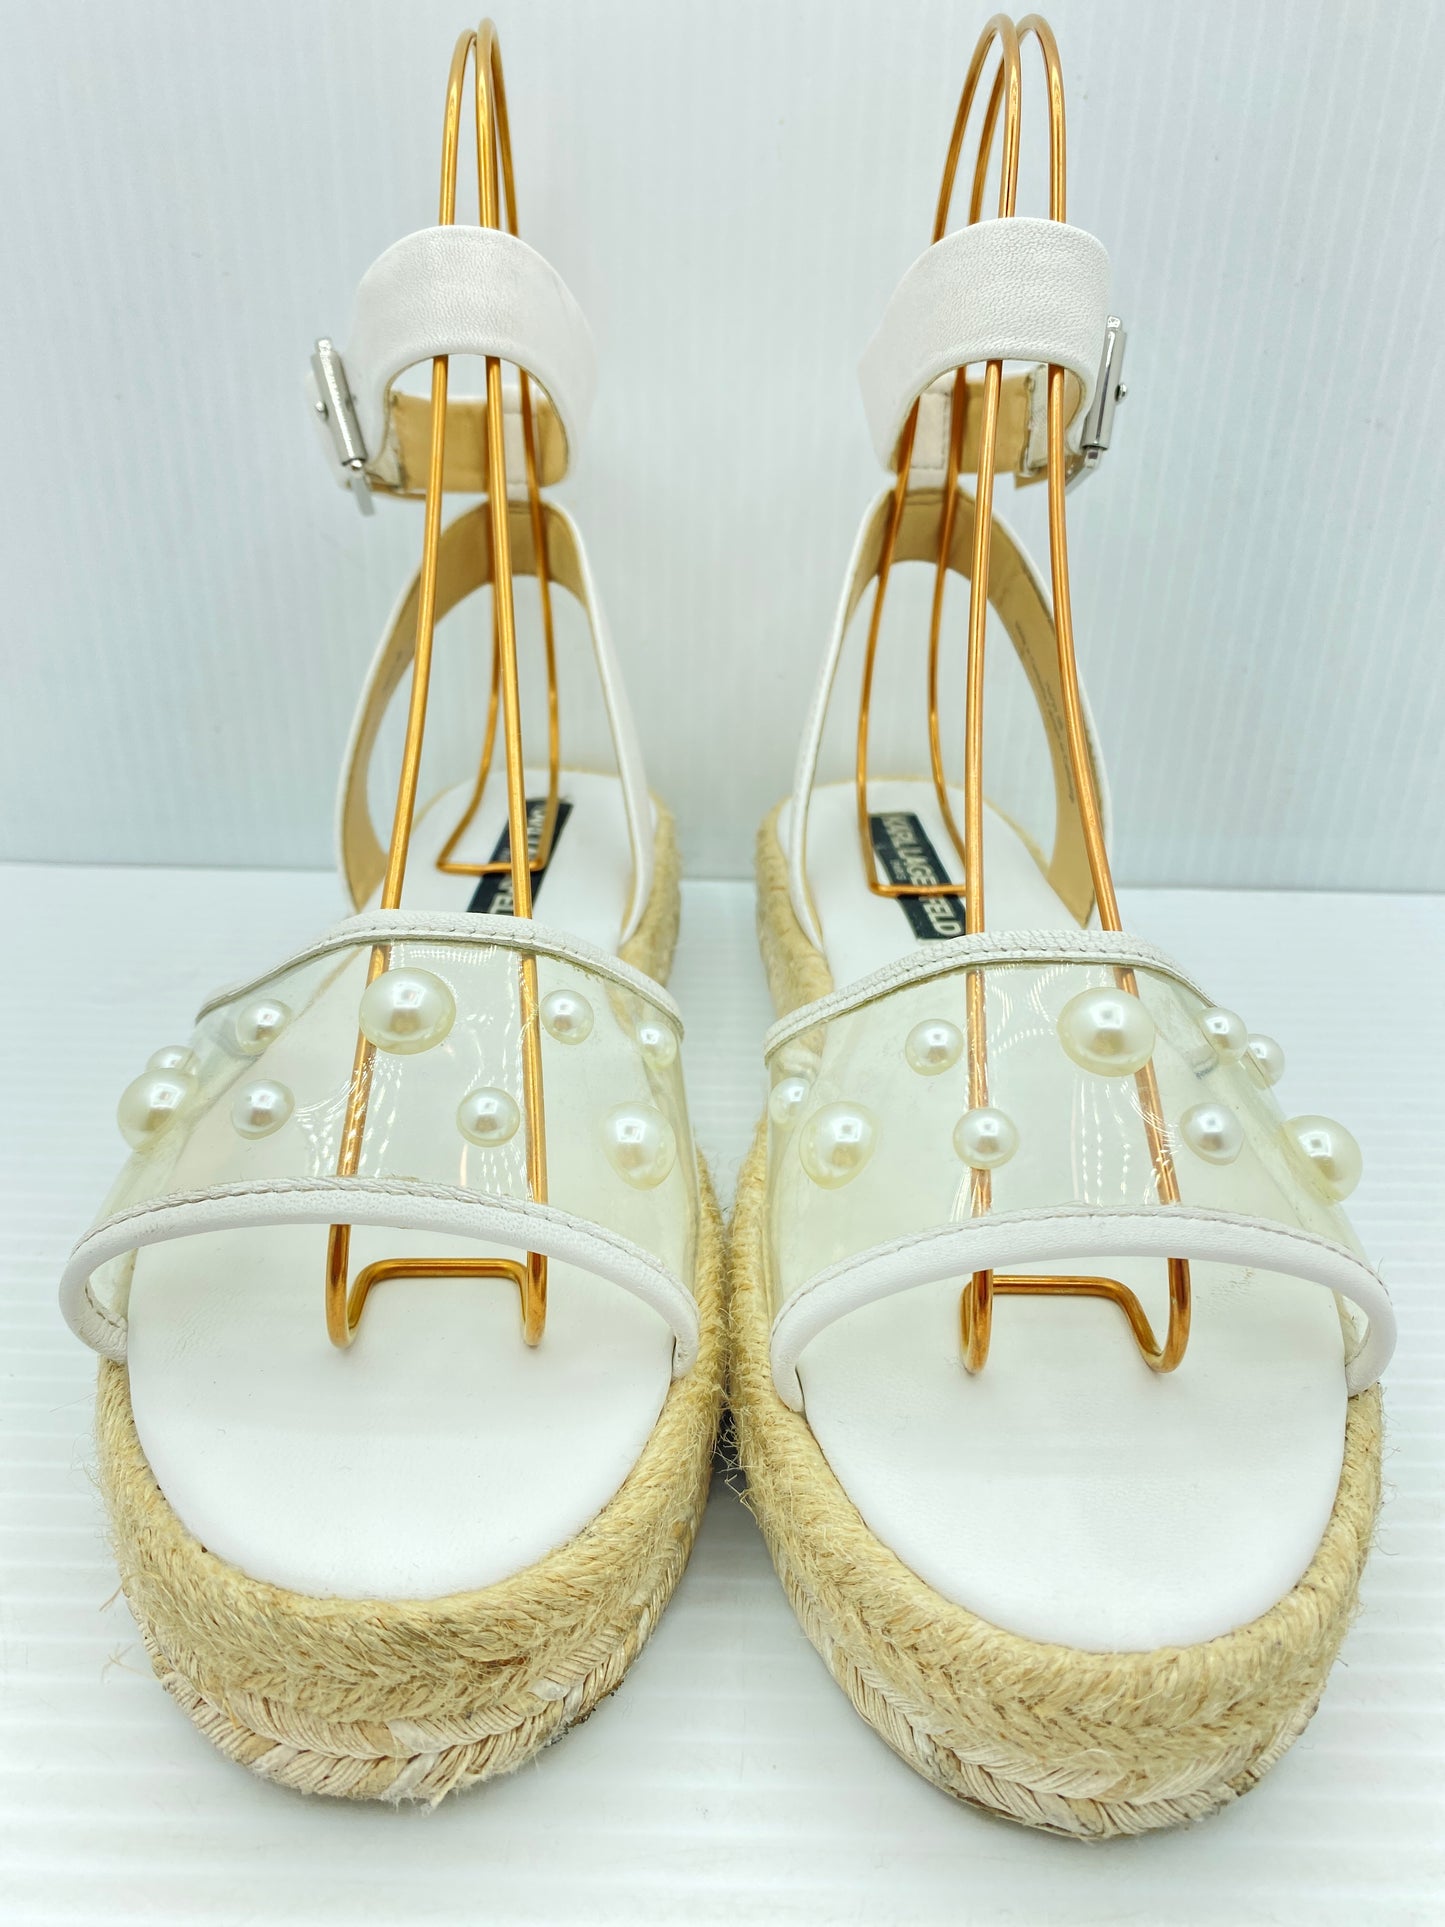 Sandals Designer By Karl Lagerfeld  Size: 7